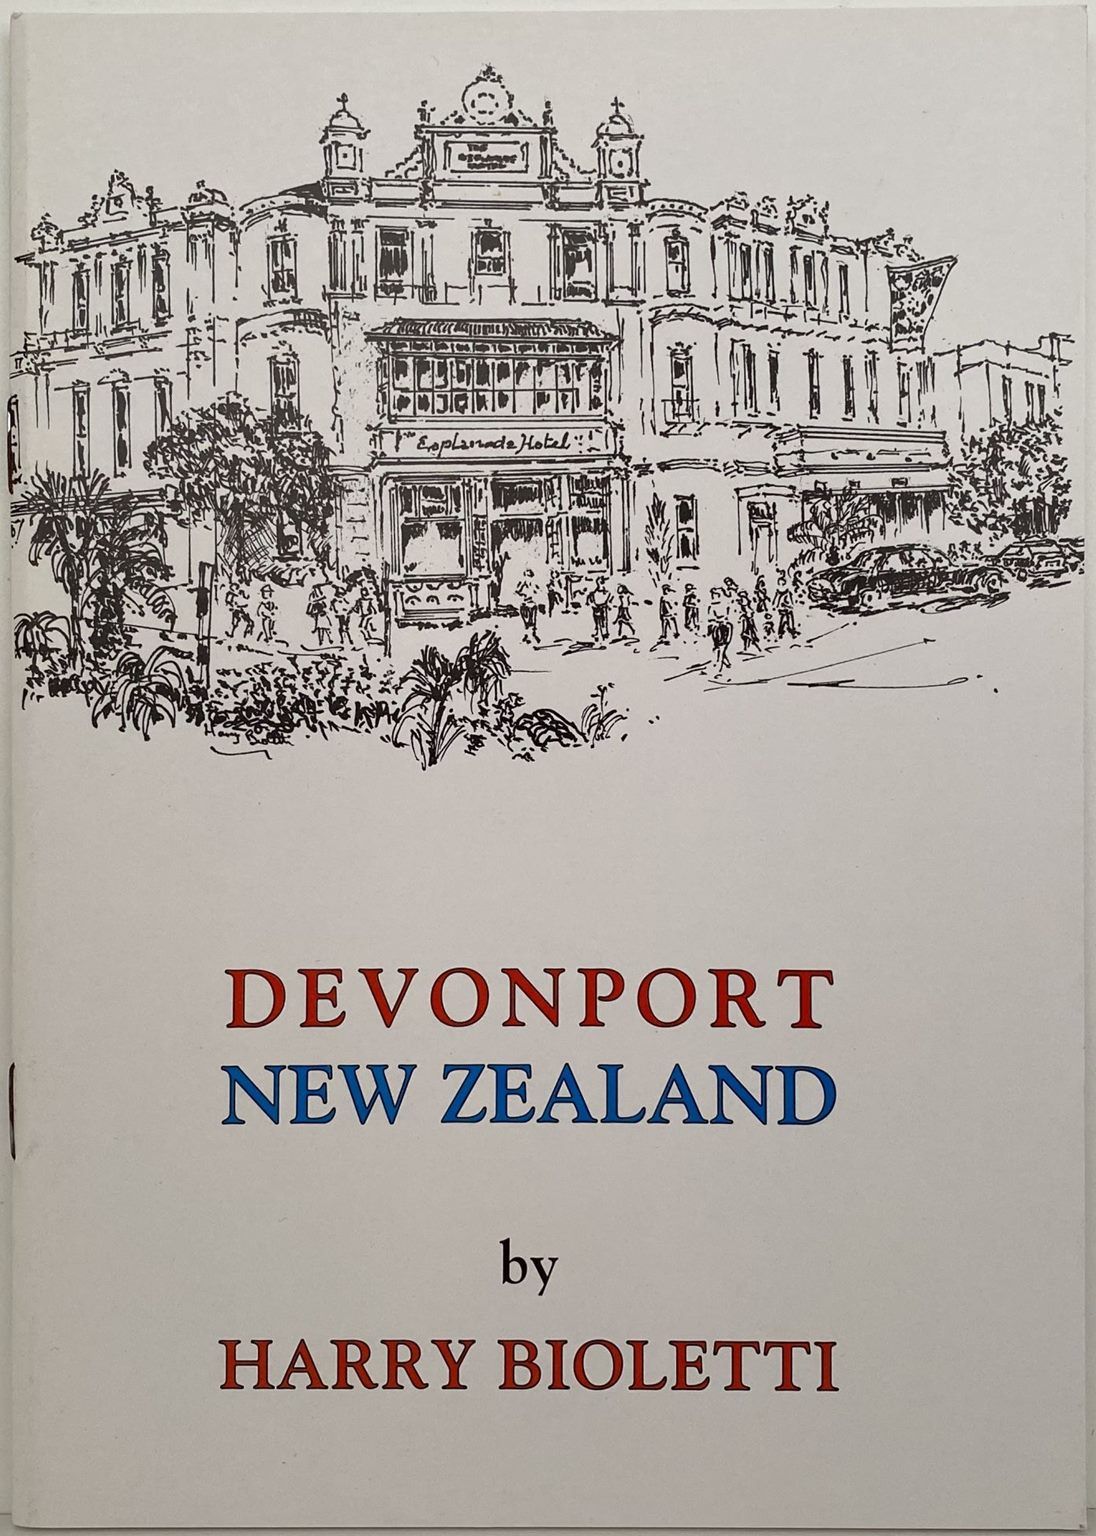 DEVONPORT NEW ZEALAND